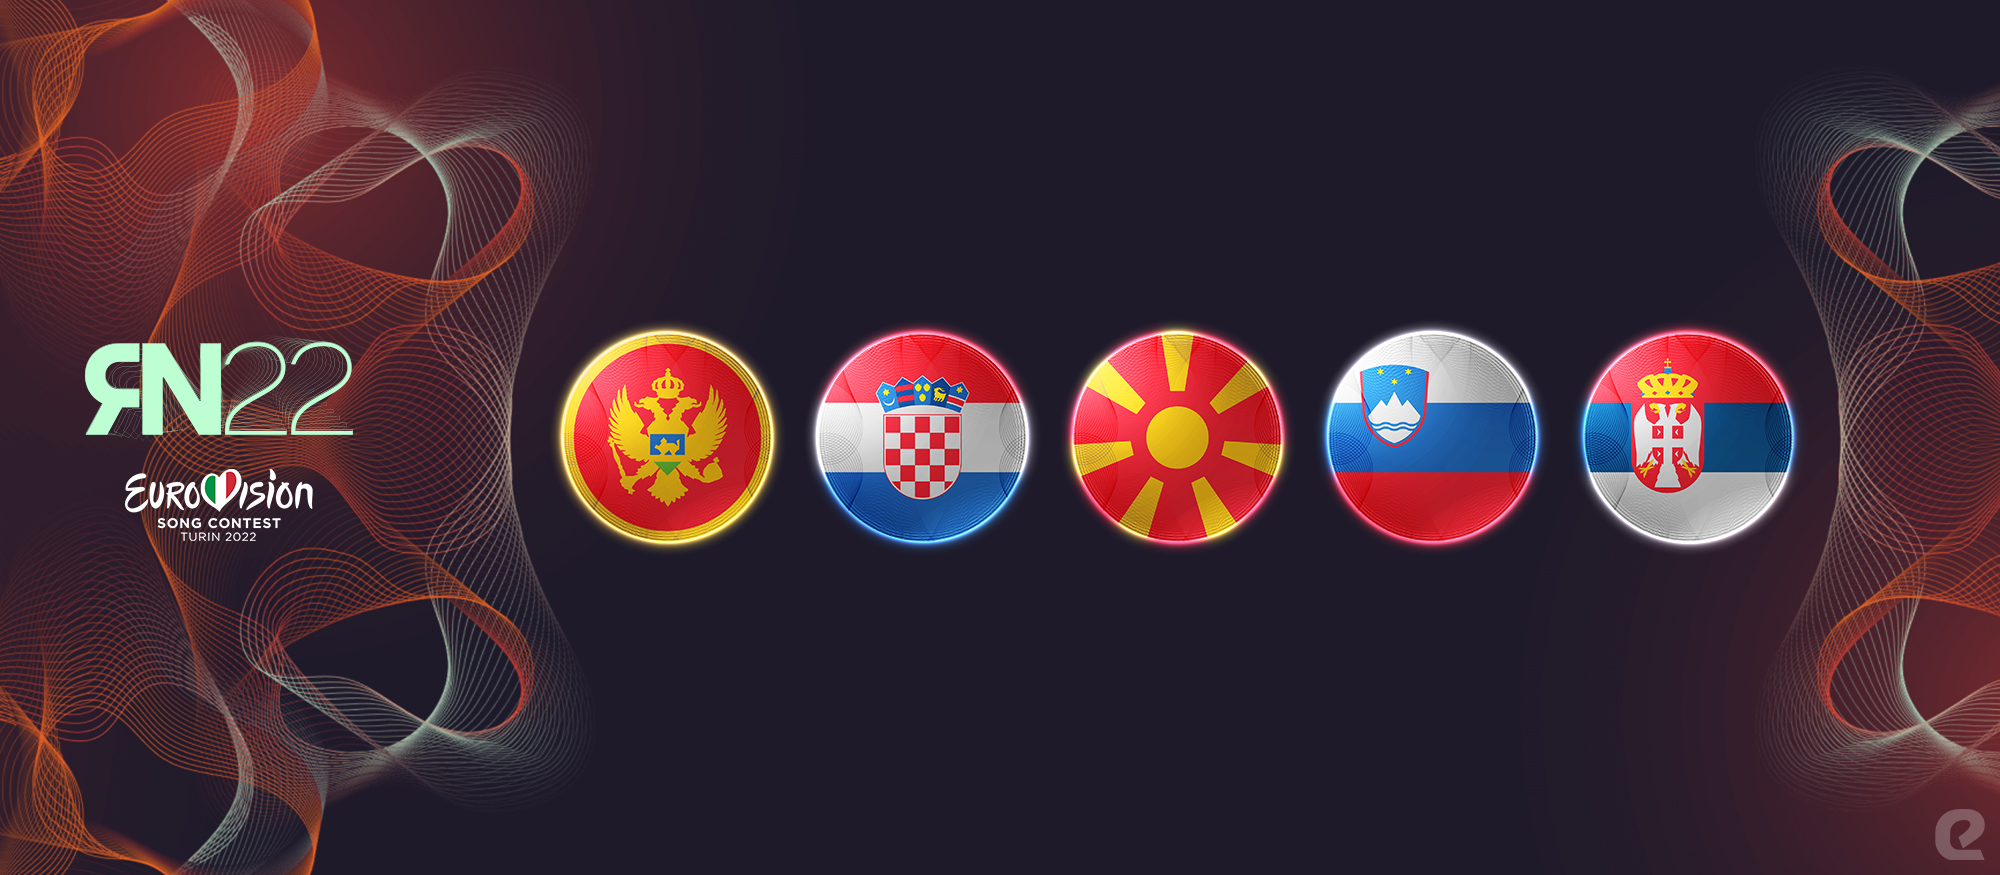 Razmišljamo naglas Eurosong 2022. eurosong.hr Crna Gora Hrvatska Sjeverna Makedonija Slovenija Srbija